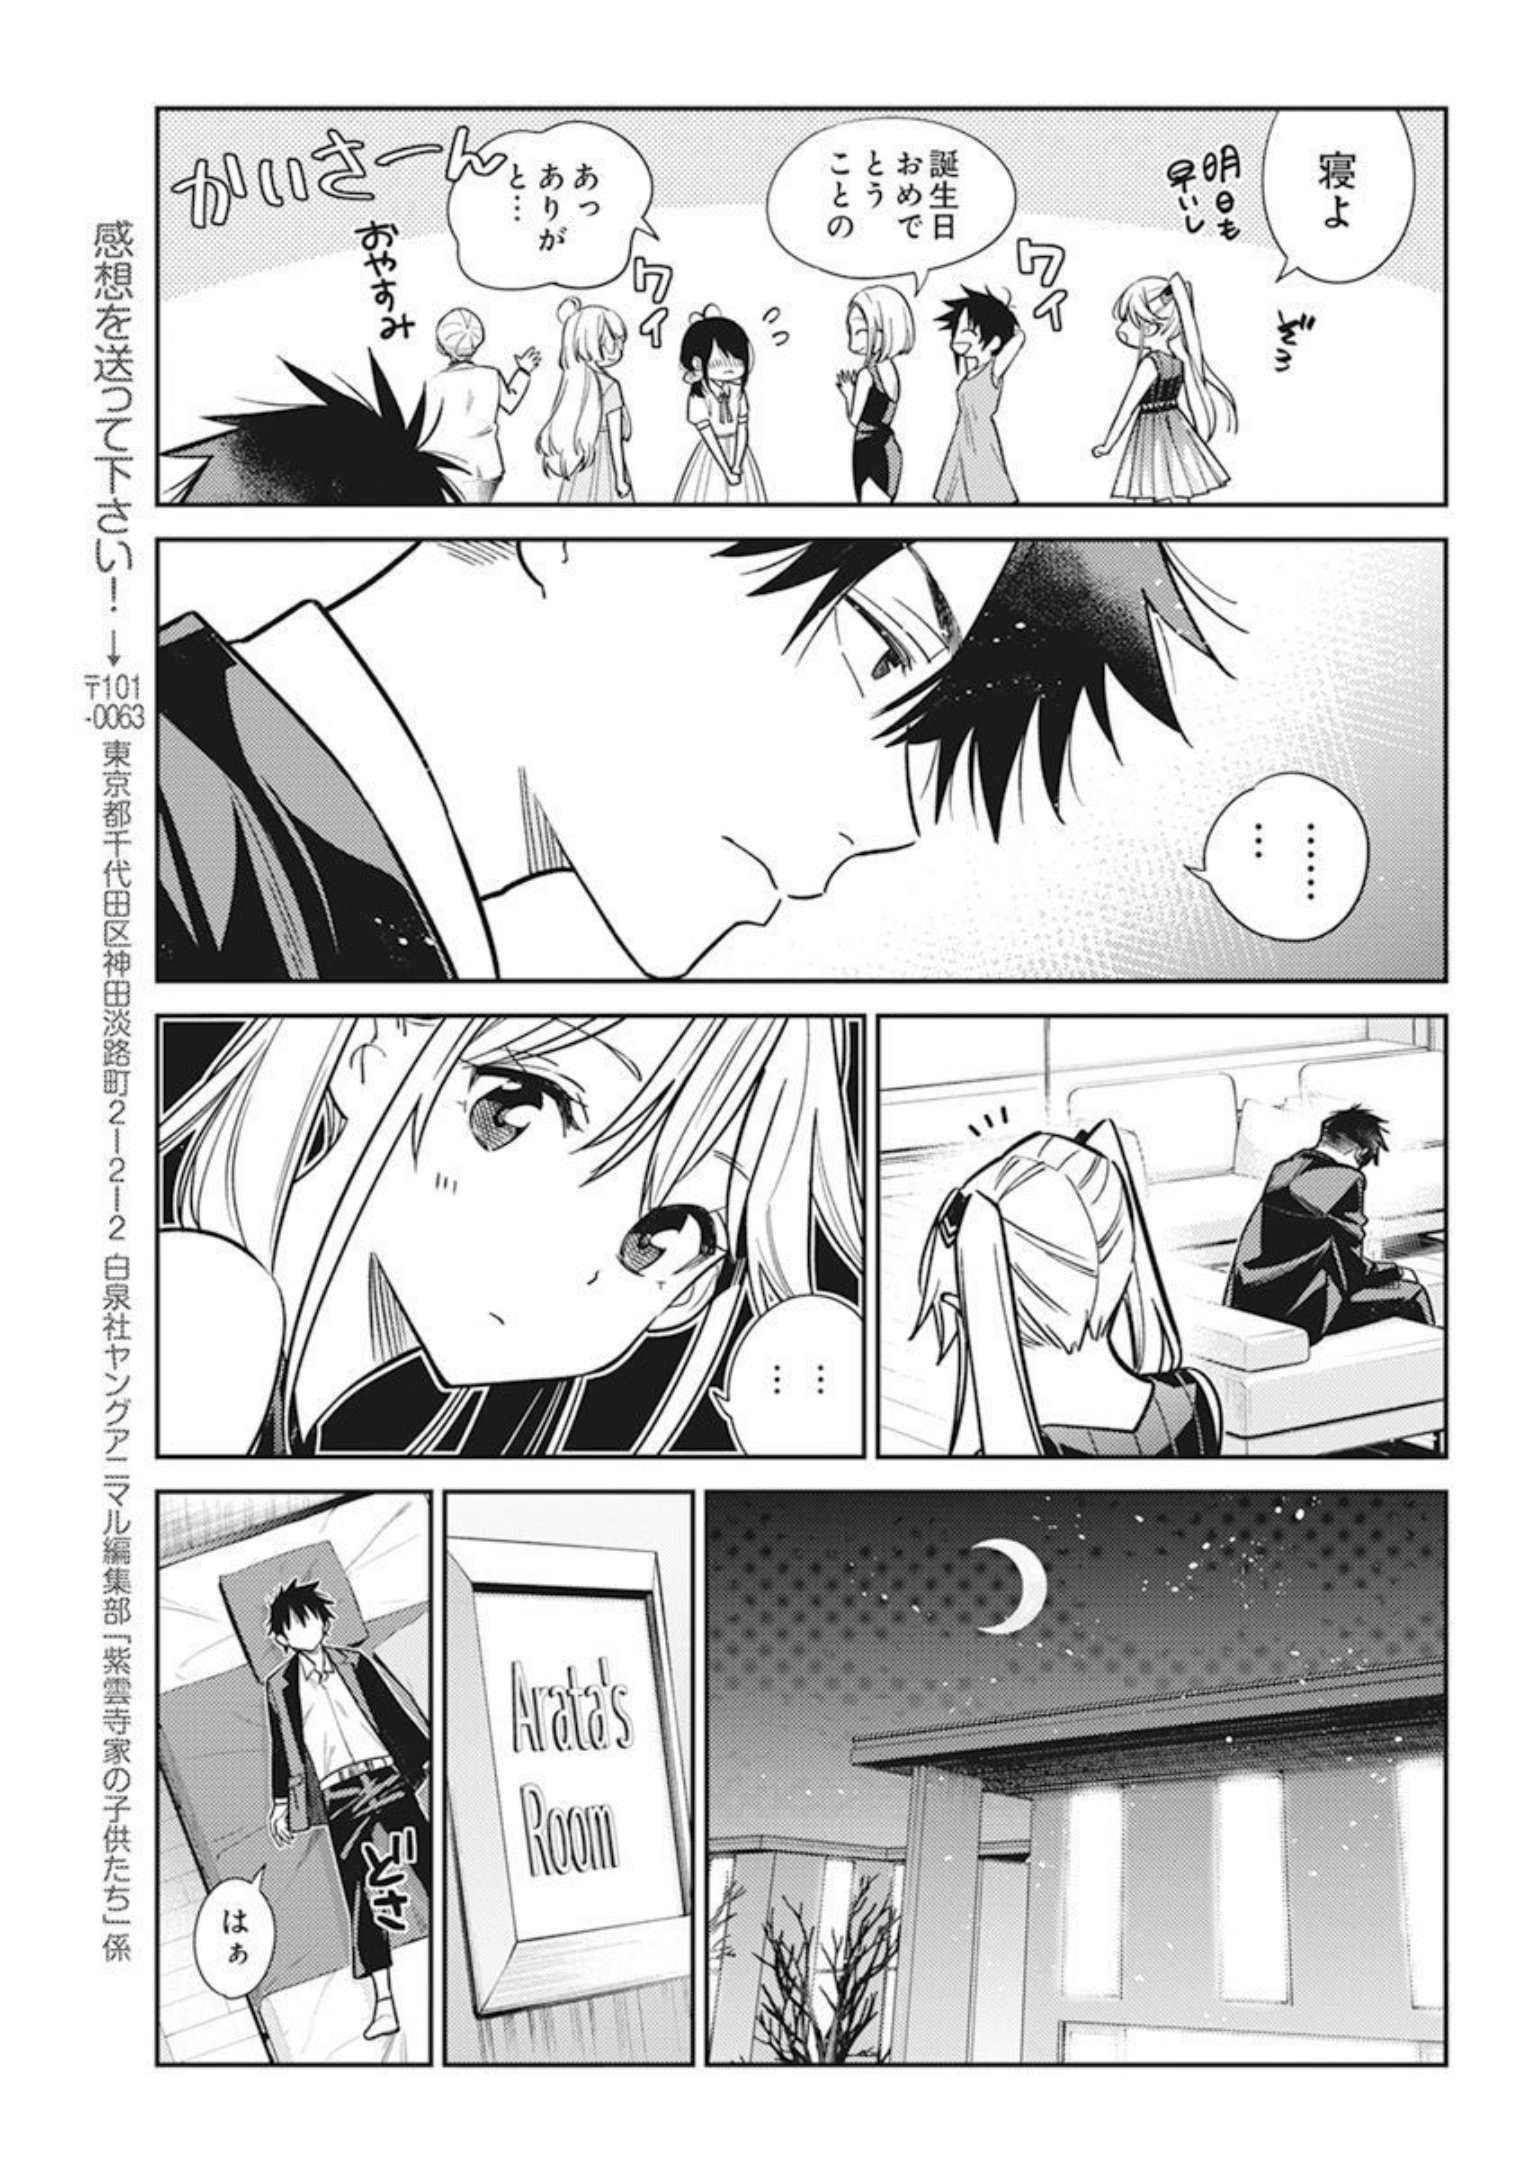 Shiunji-ke no Kodomotachi (Children of the Shiunji Family) - Chapter 02 - Page 18